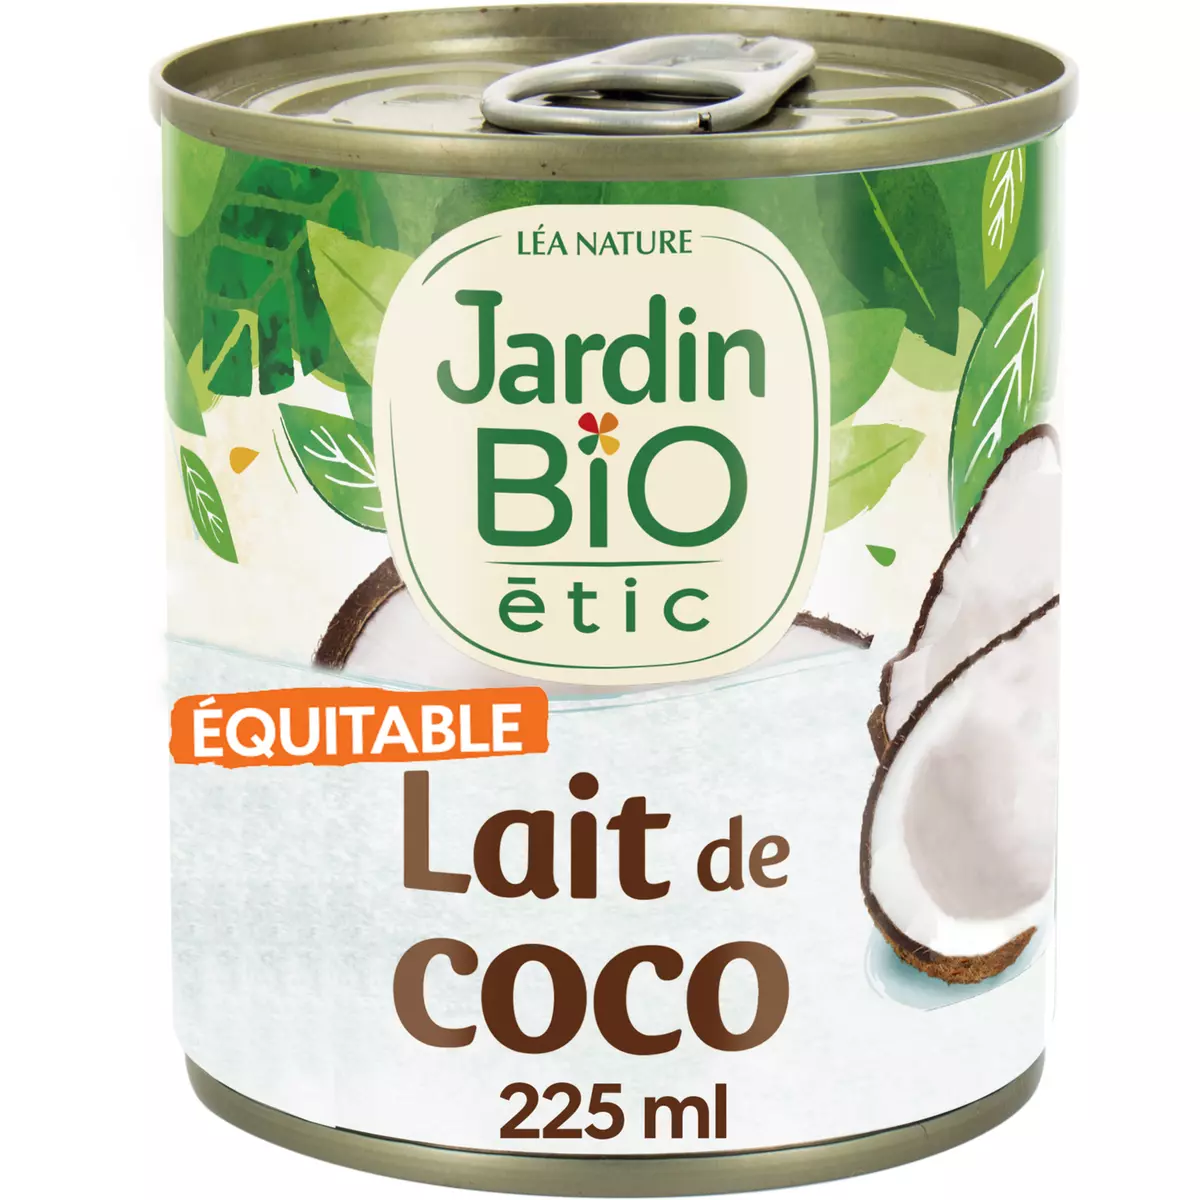 JARDIN BIO ETIC Lait de coco vegan en boîte 225ml